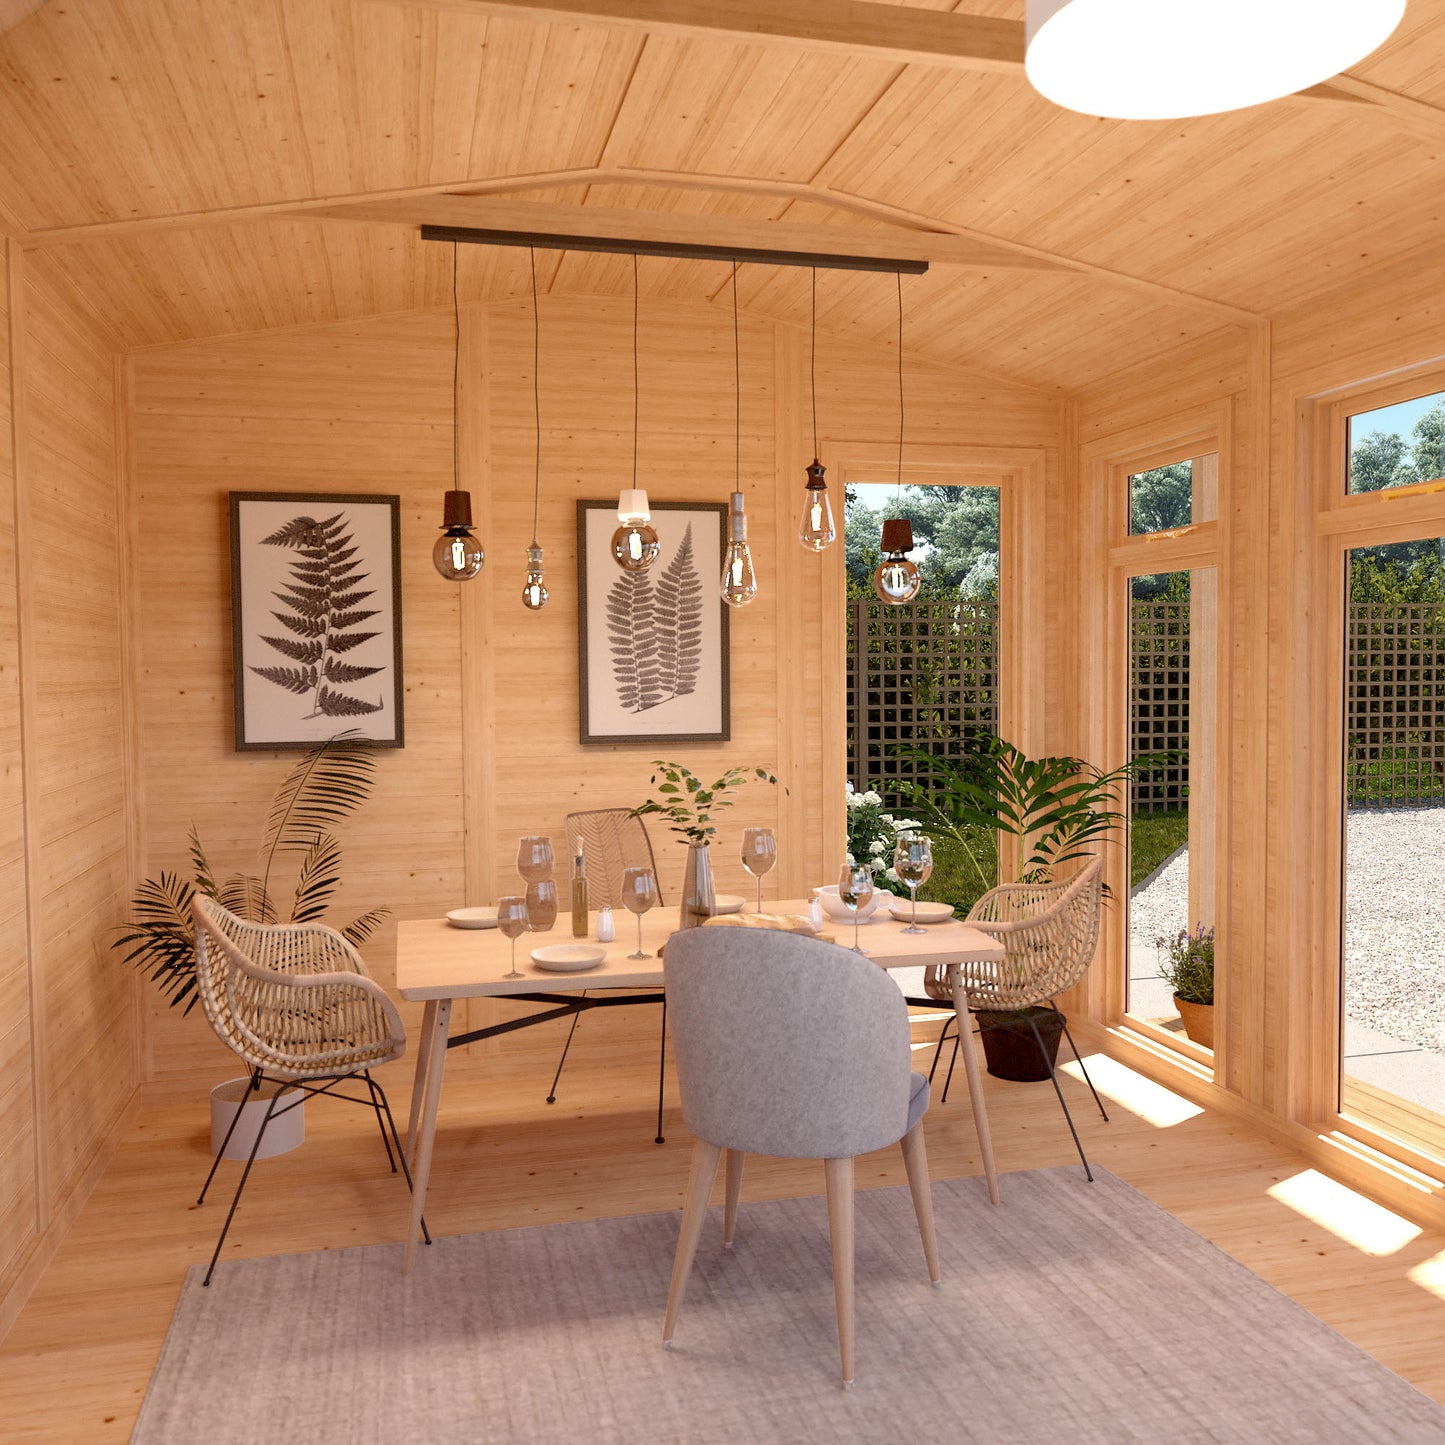 The Rufford 3m x 4m Premium Insulated Garden Room